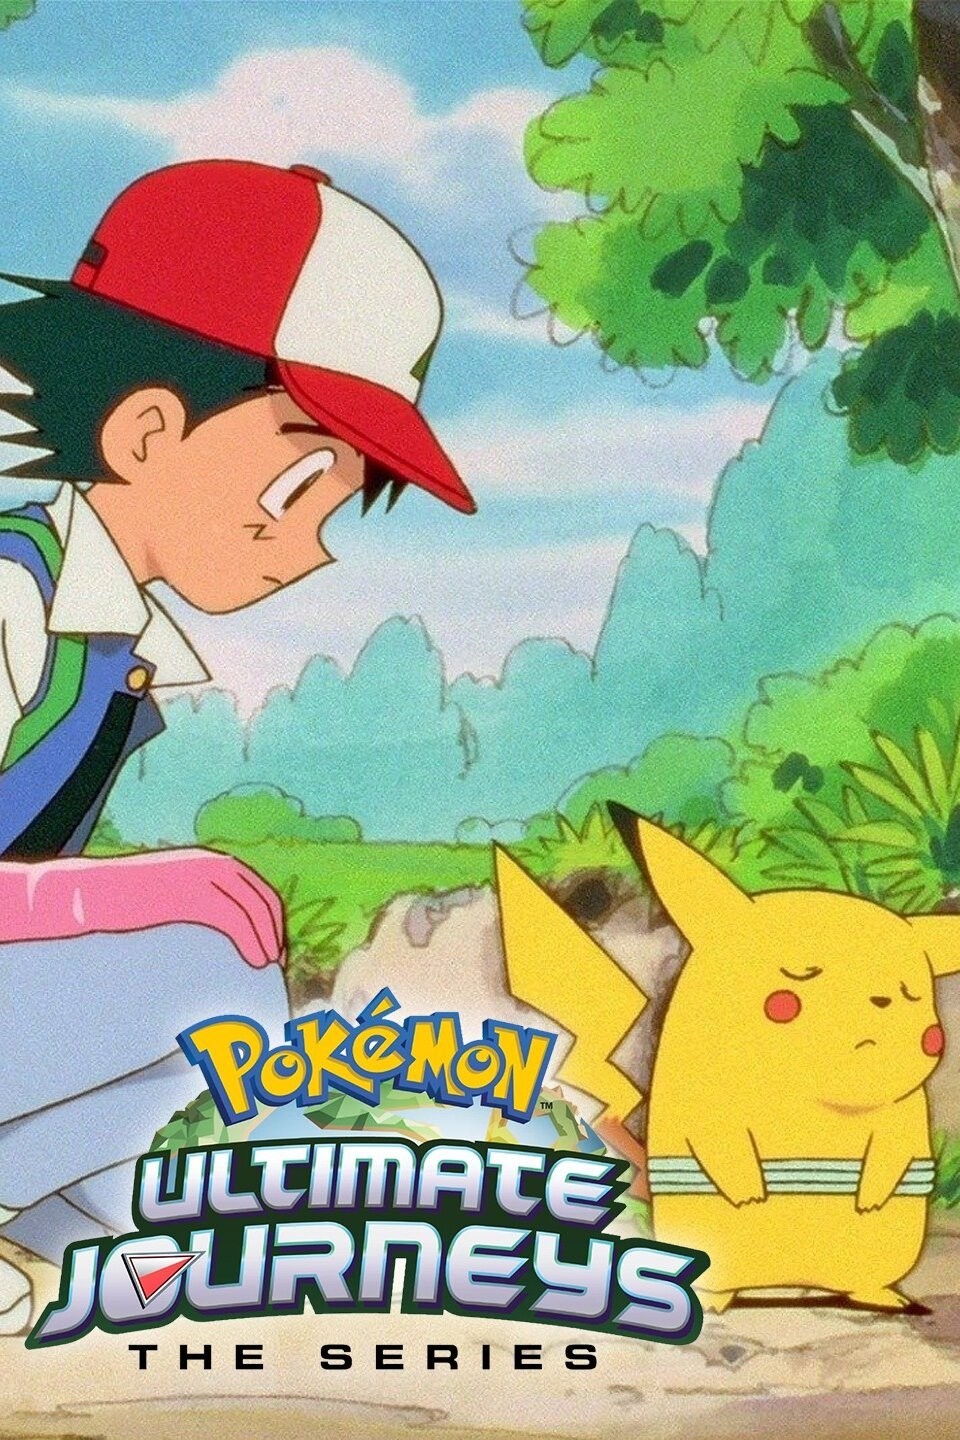 Review: Pokémon Ultimate Journeys